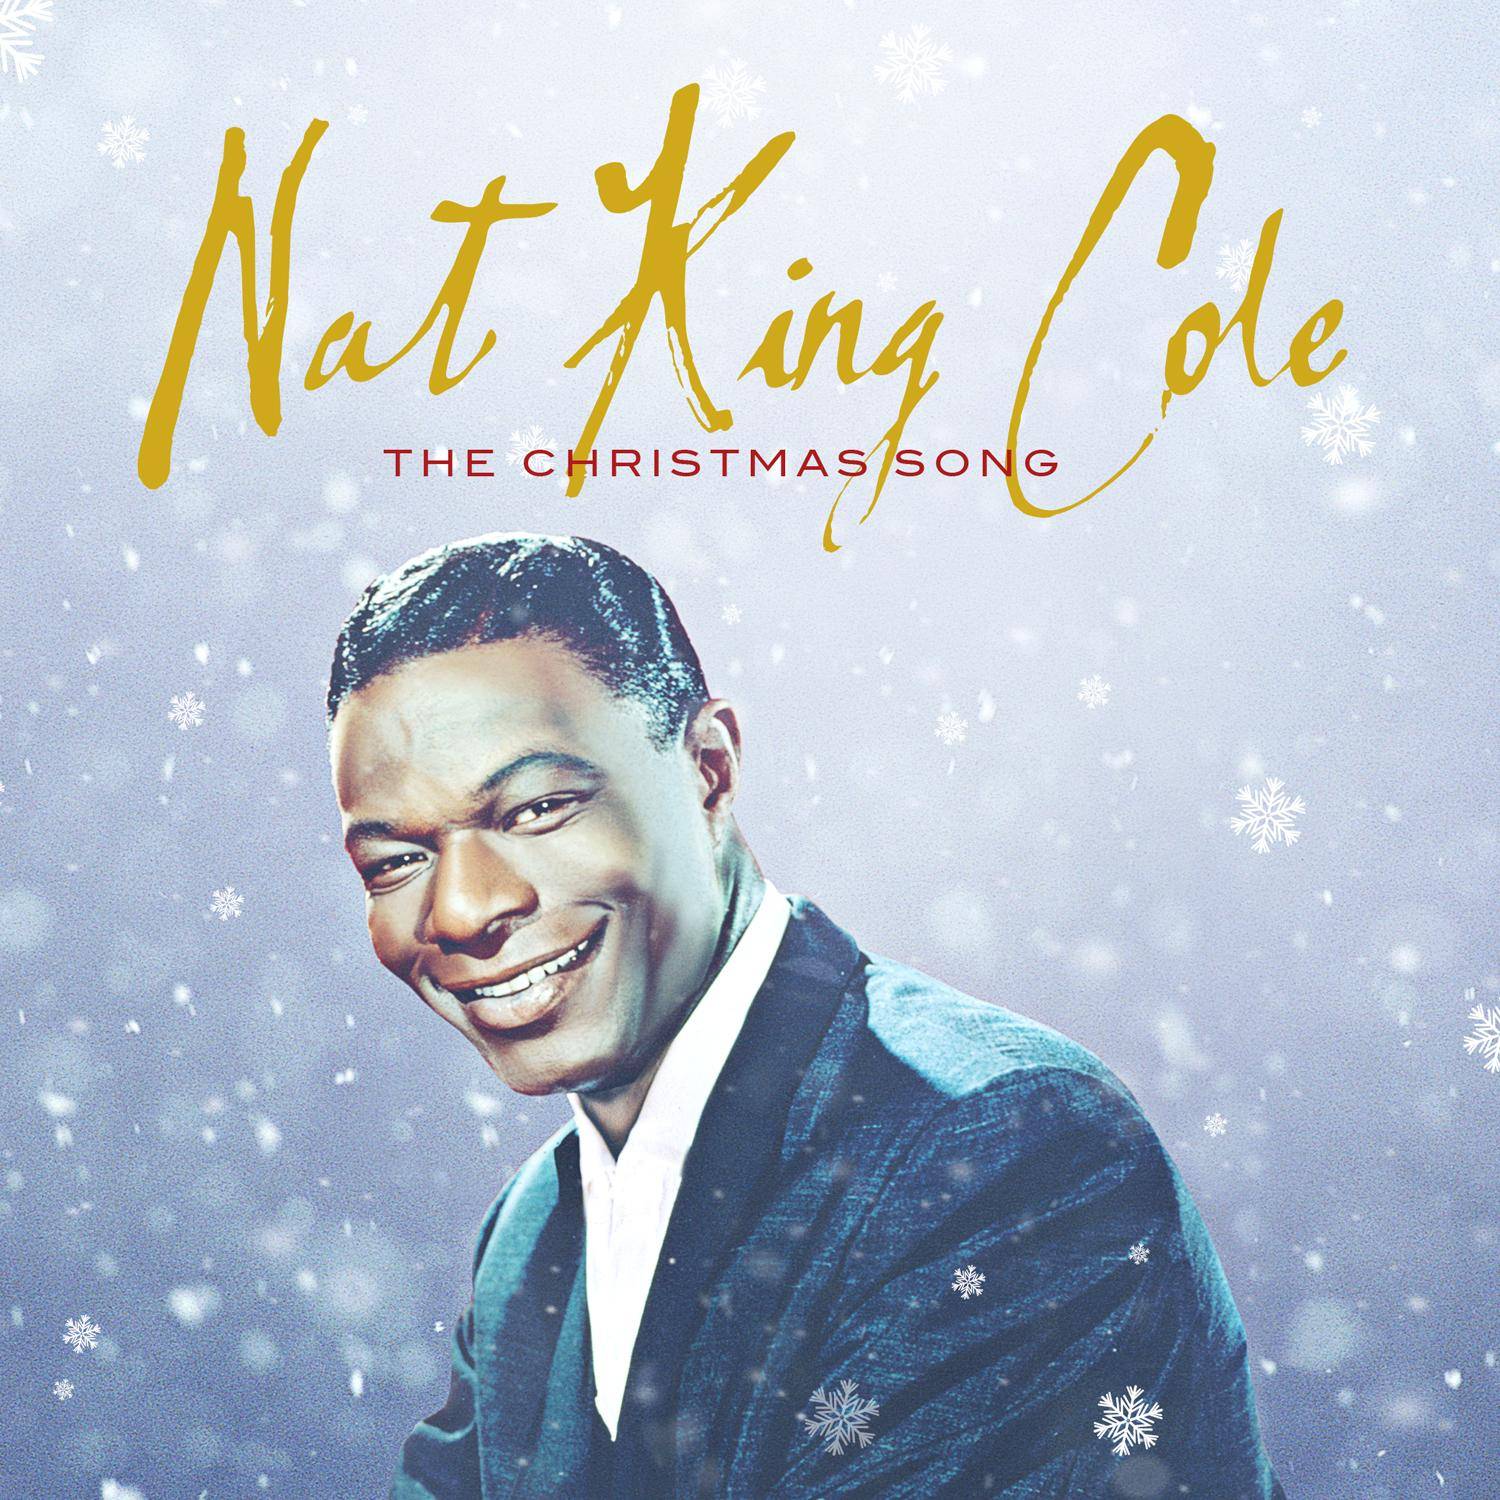 Тесто песня слушать. Нат Кинг Коул. Нат Кинг Коул Christmas. Nat King Cole - the Christmas Song. L-O-V-E нэт Кинг Коул.